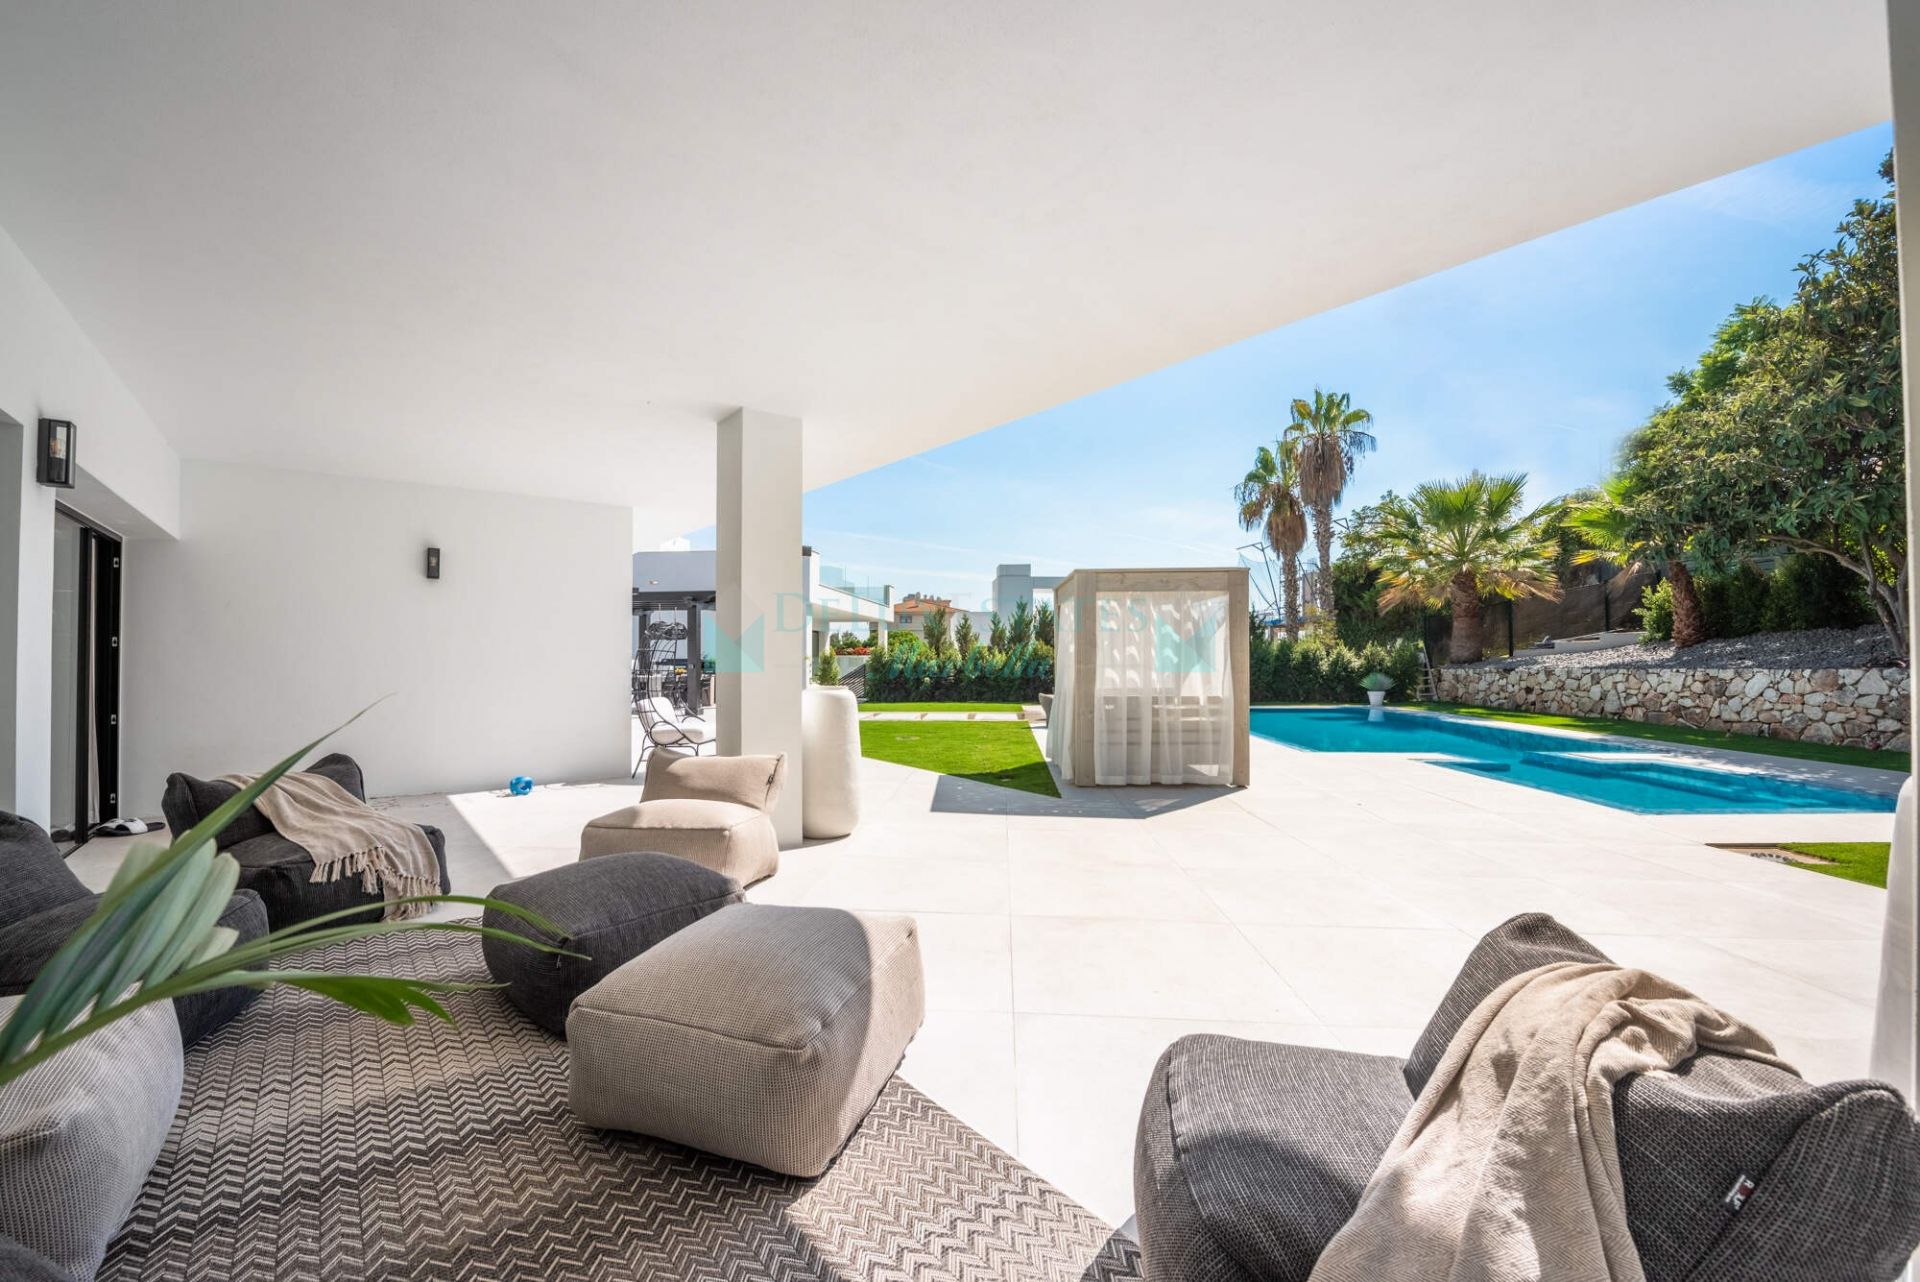 Photo Gallery - Luxury new villa next to Puerto Banus harbor